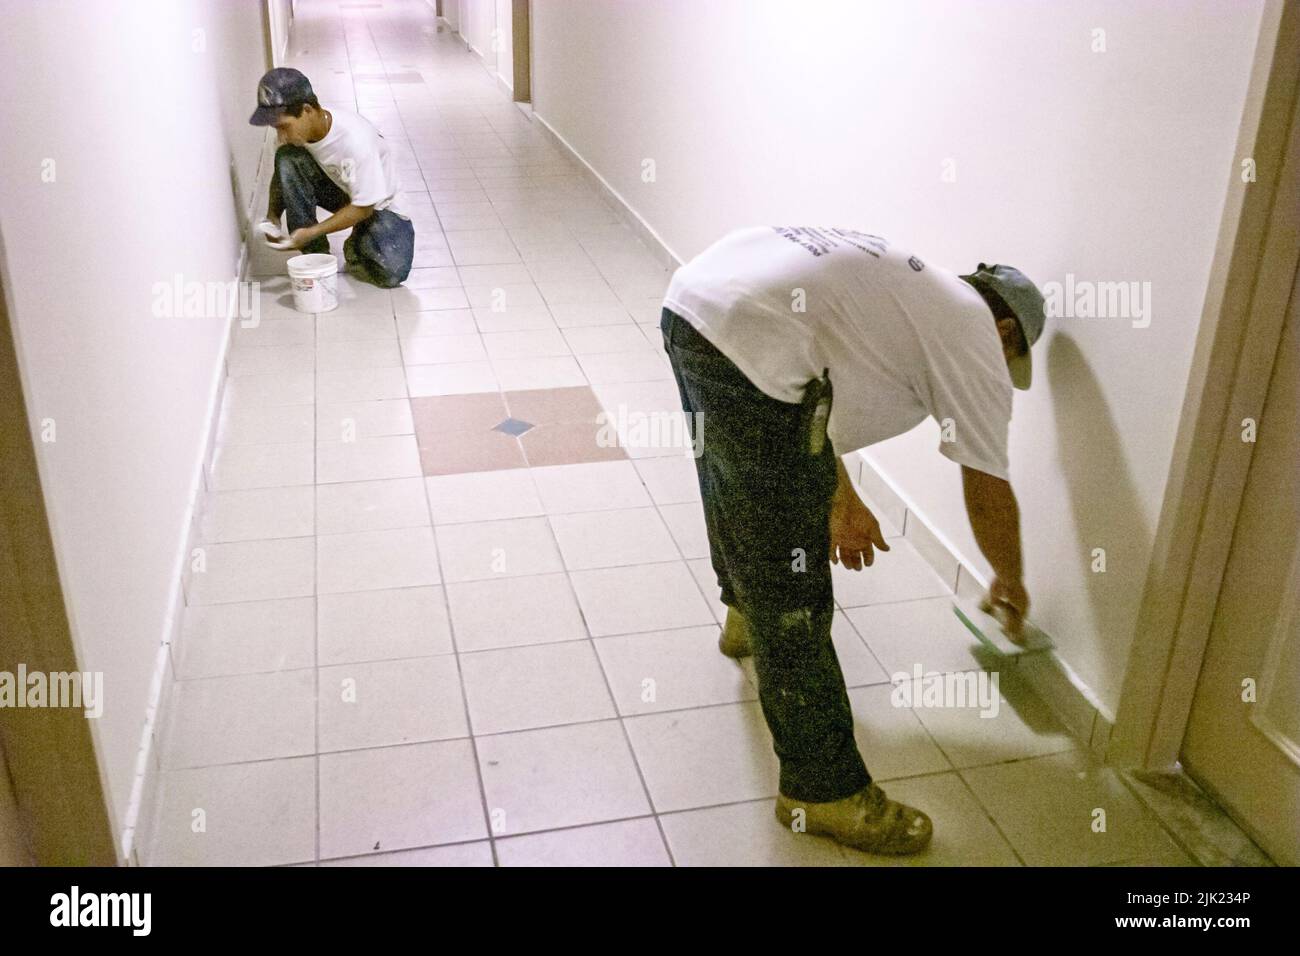 Miami Beach Florida,Hispanic man installer installing new tile inside interior condominium condo residential apartment building hallway worker working Stock Photo